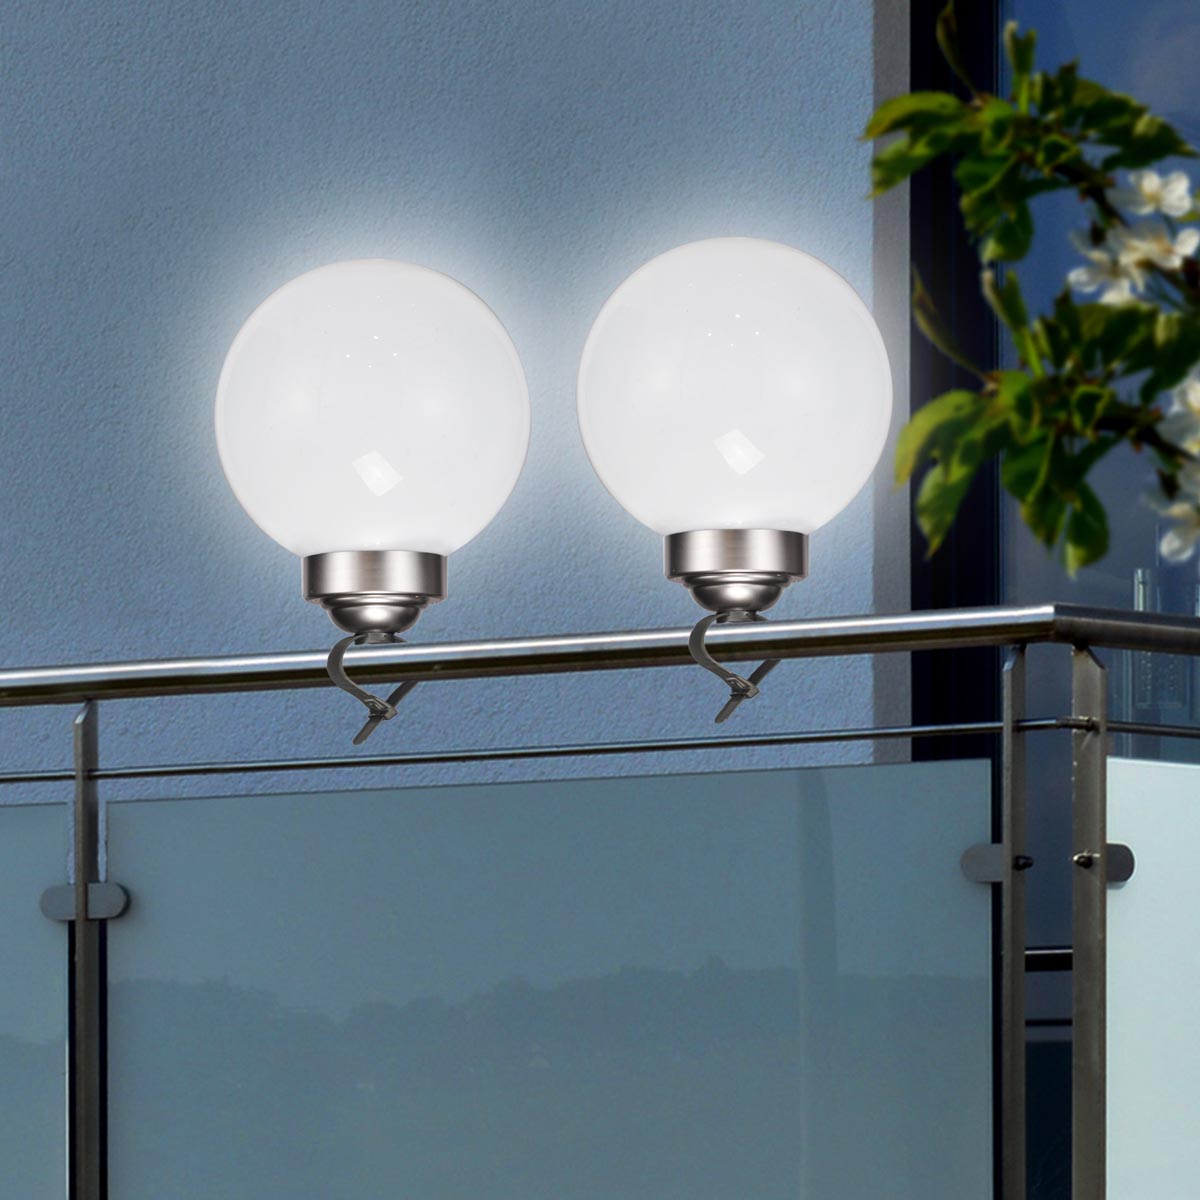 E-shop Haushalt international LED solární lampa Koule 2v1, Ø 20 cm